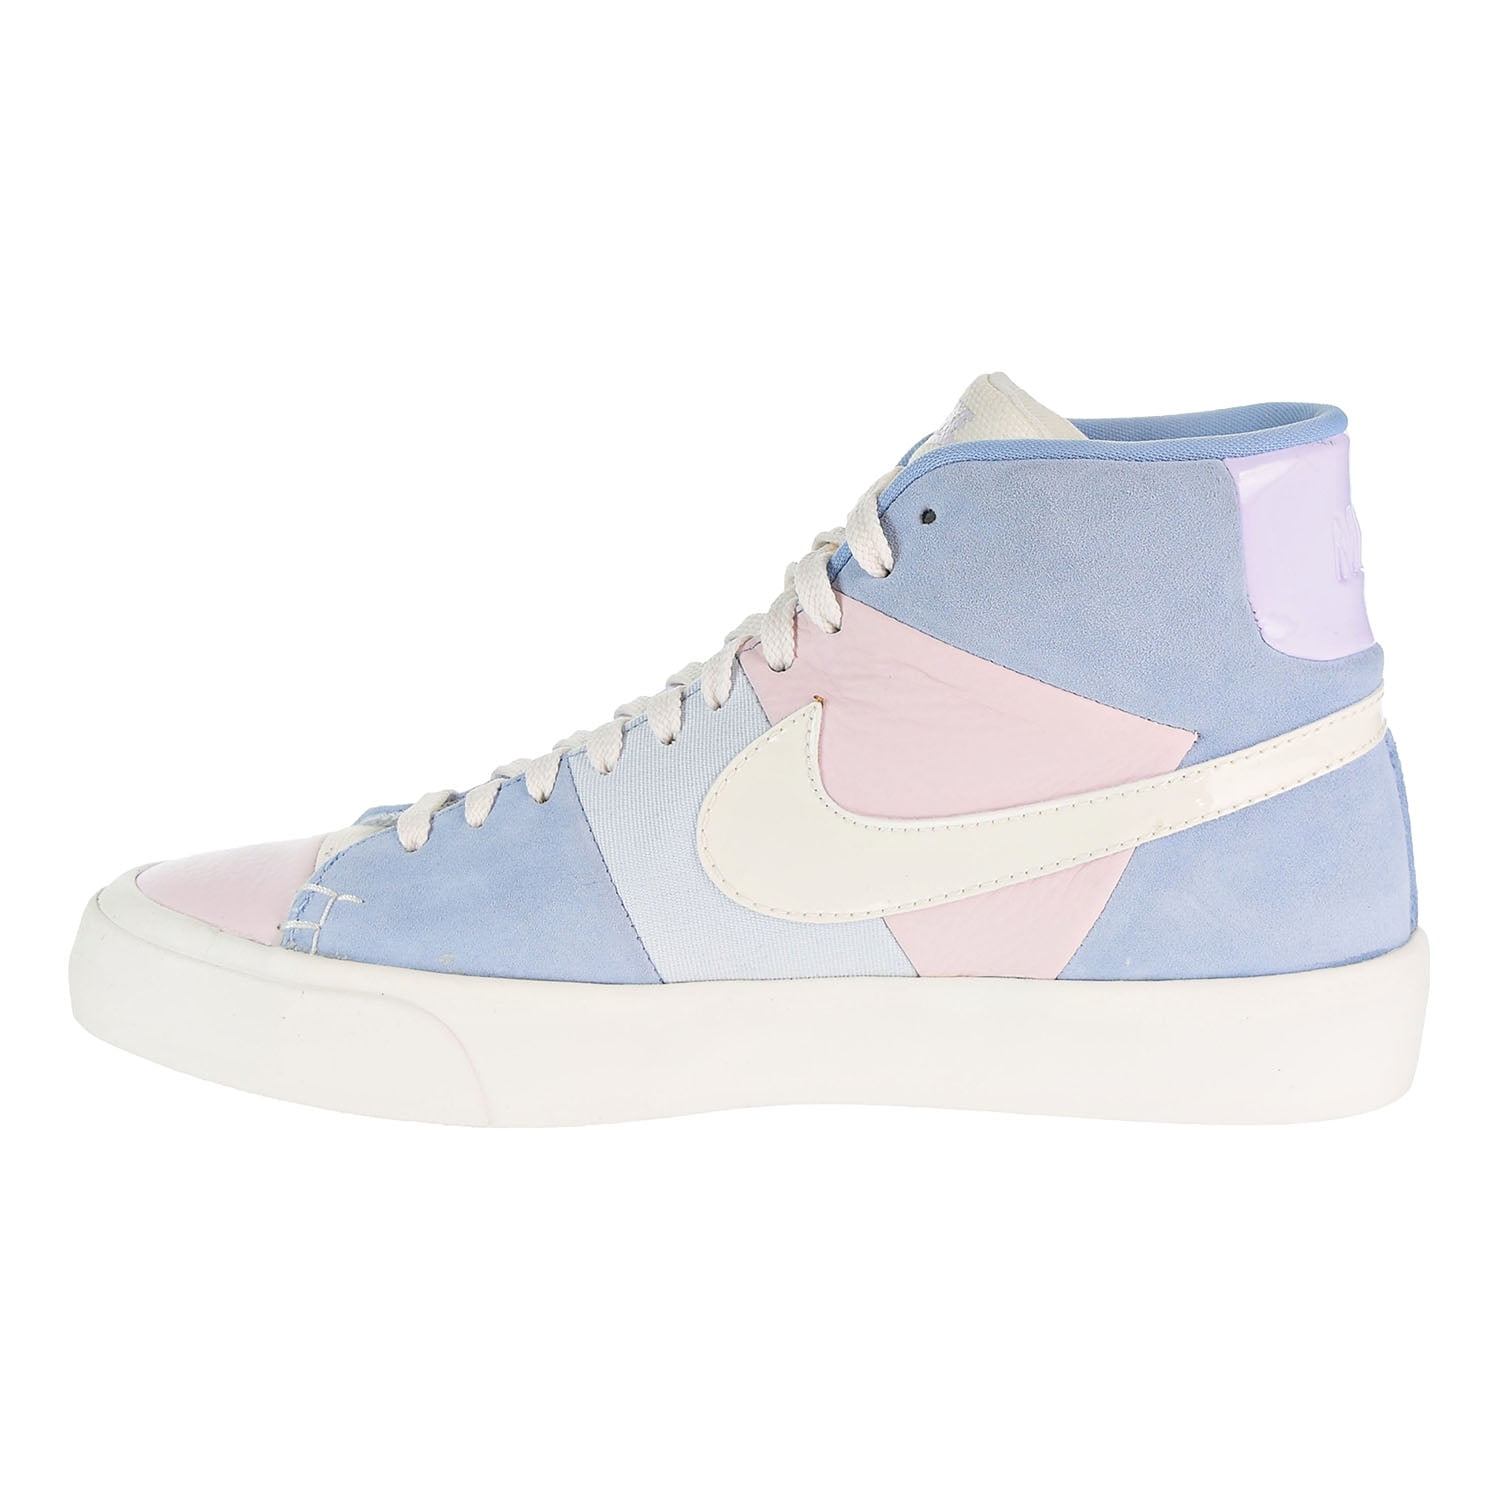 Nike Blazer Royal Easter QS Shoes Pink/Blue ao2368-600 - Walmart.com